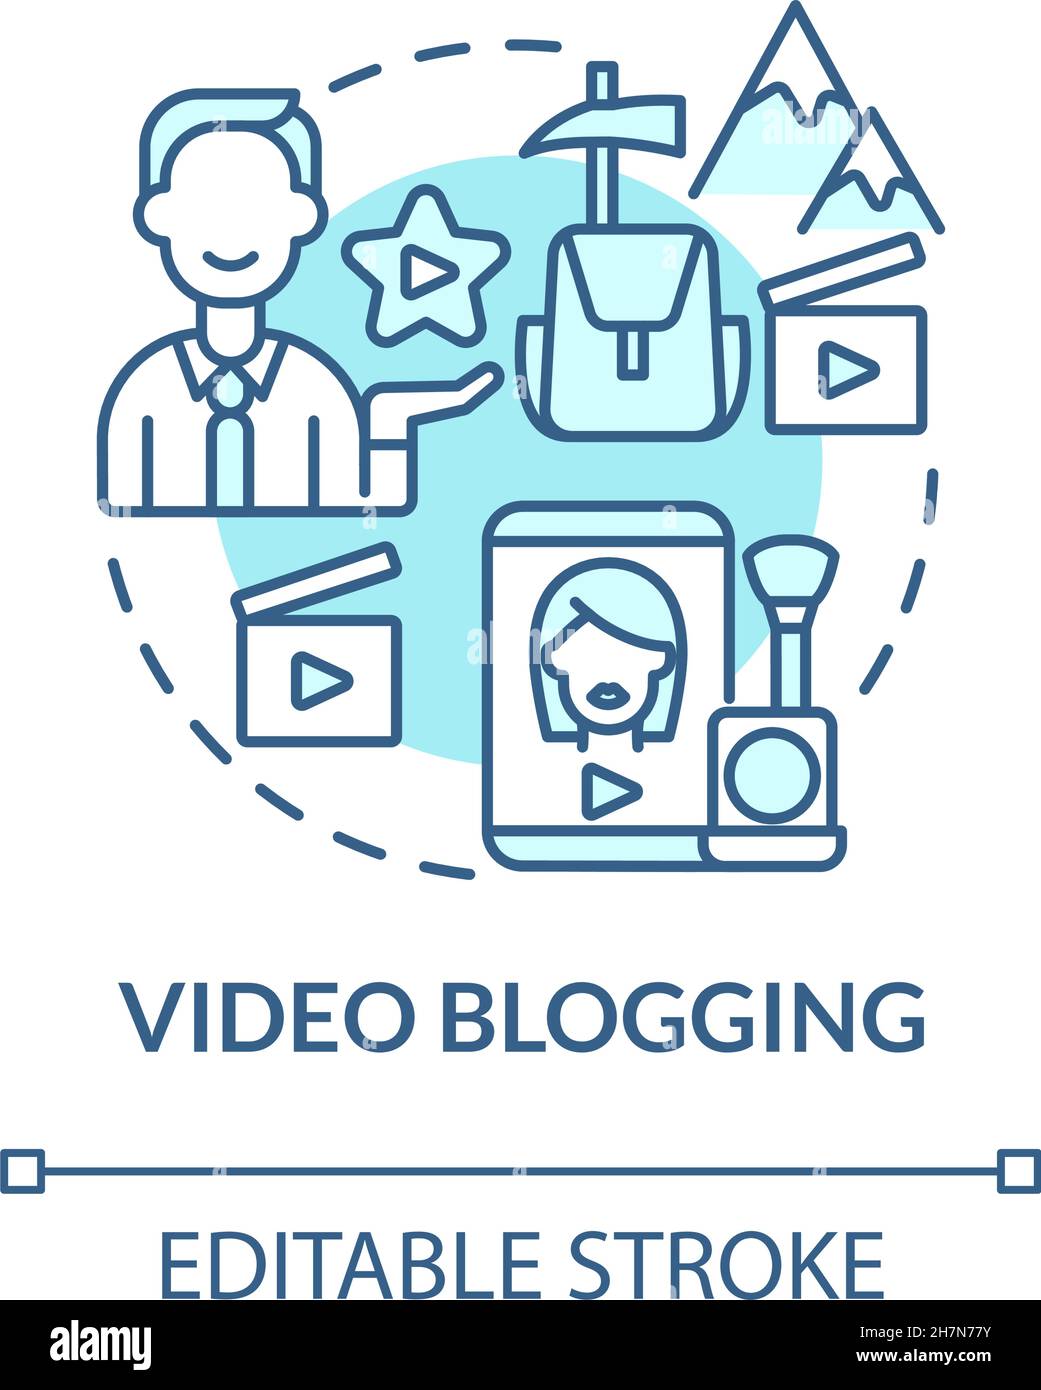 Video blogging blue concept icon Stock Vector